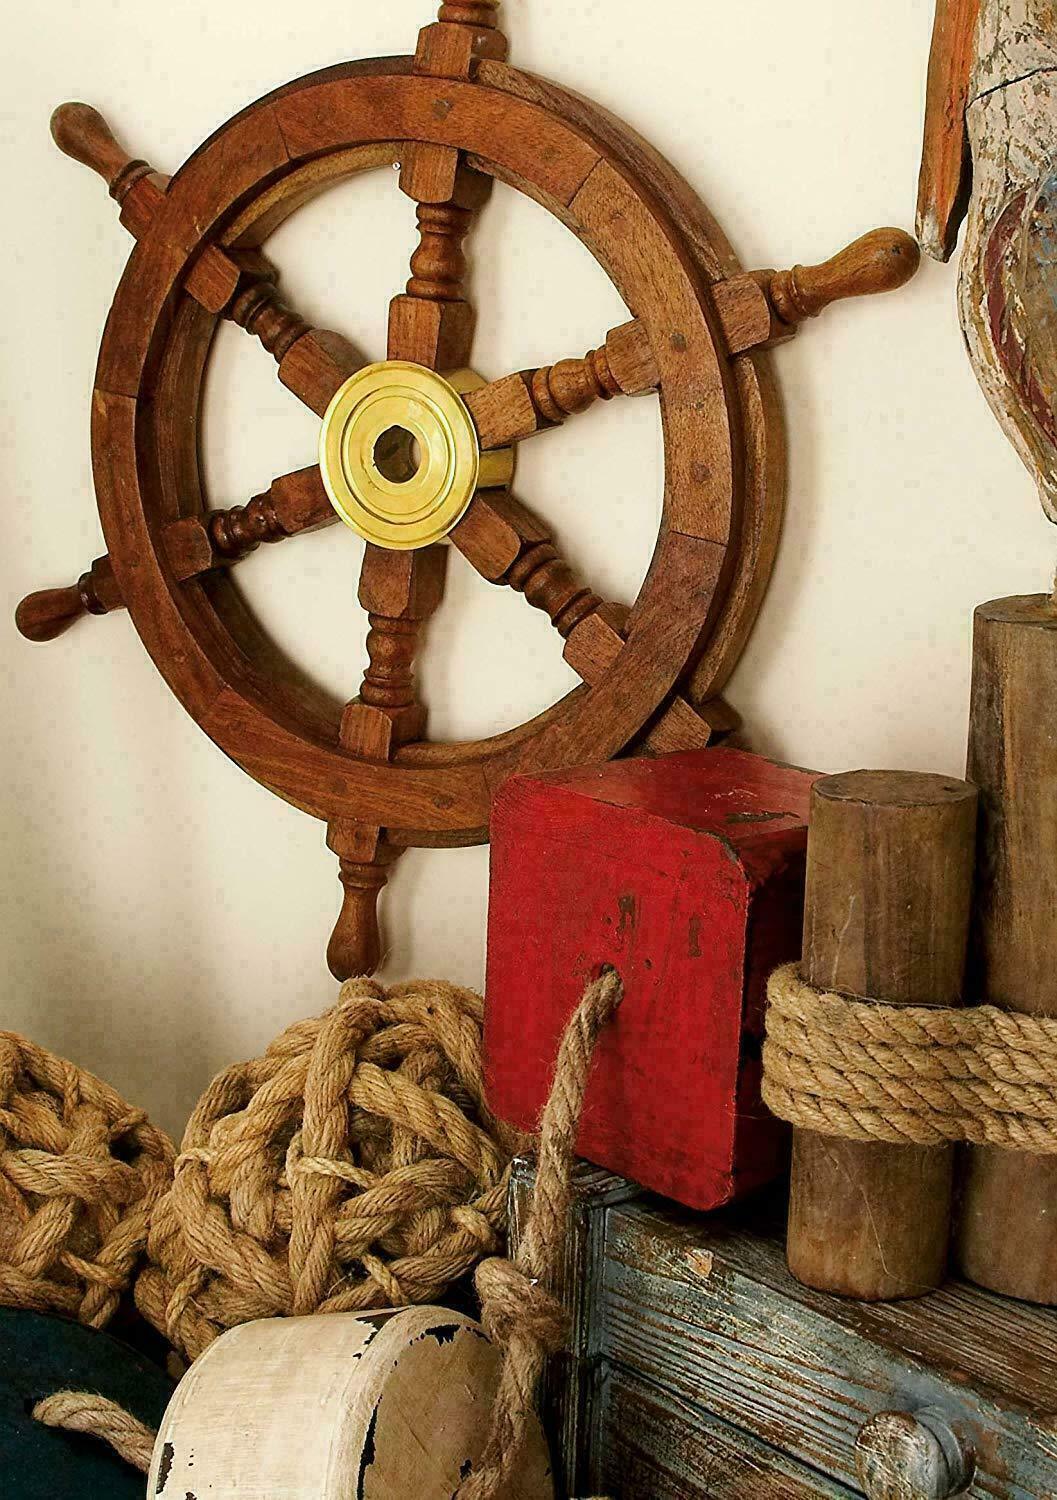 18" Wooden Ship Wheel Collectible Maritime Nautical Boat Steering Wall Decor